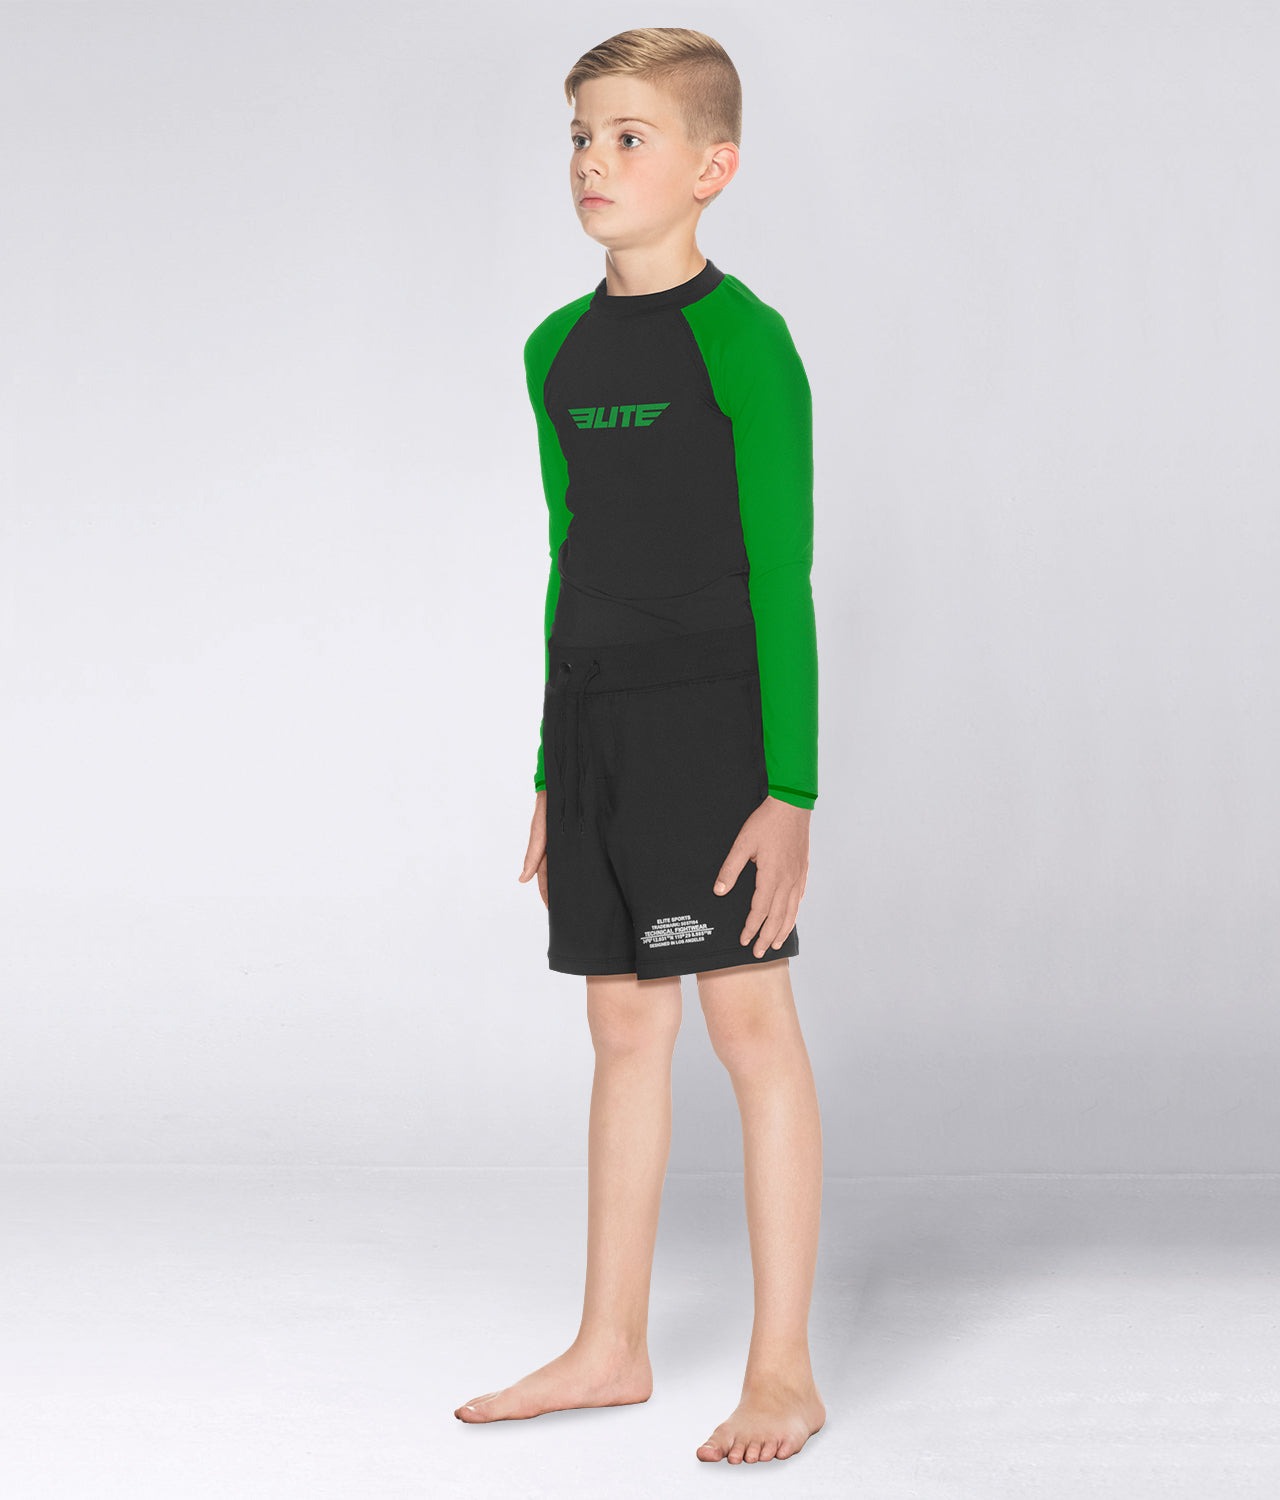 Elite Sports Kids' Standard Green Long Sleeve boxing Rash Guard